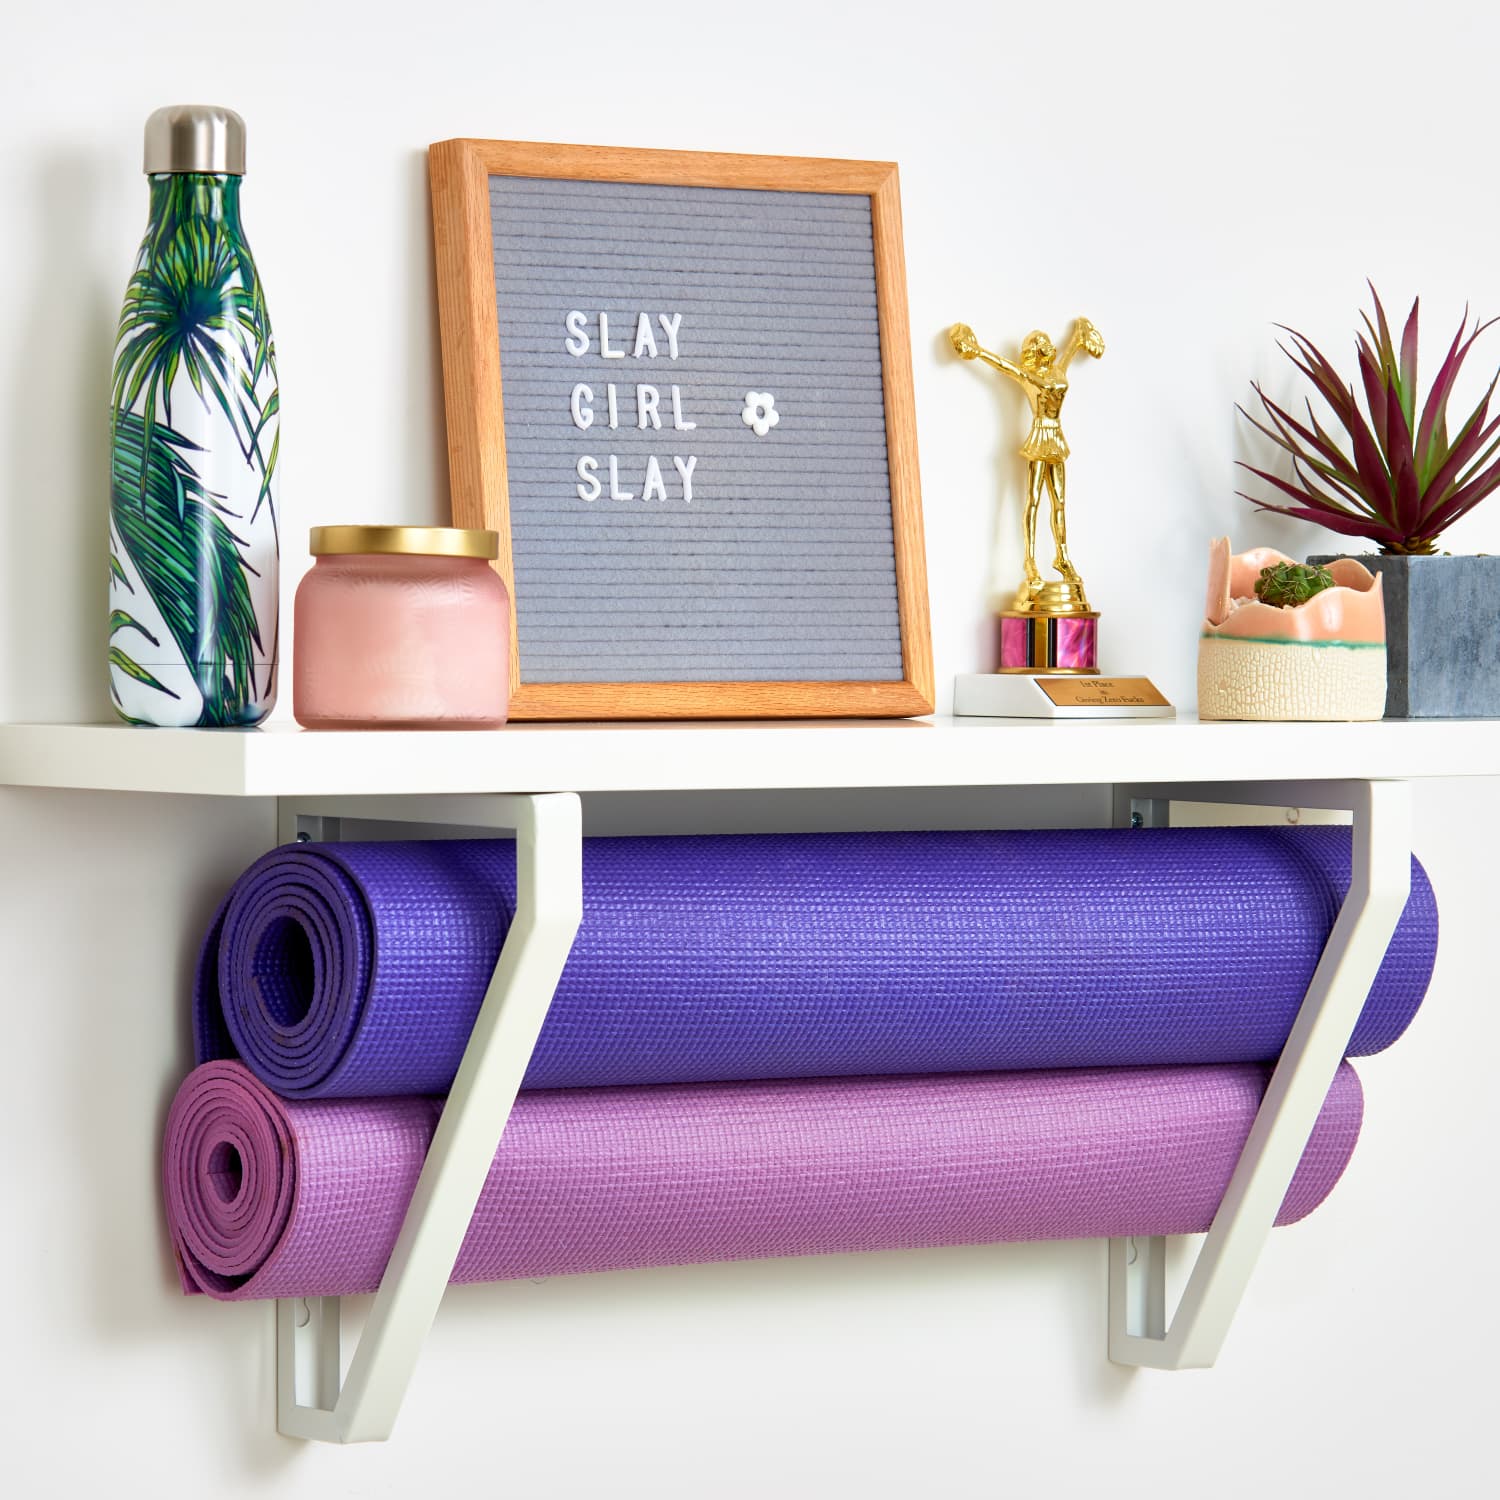 Mini home gym storage ideas for weights, Ikea hack Raskog unit